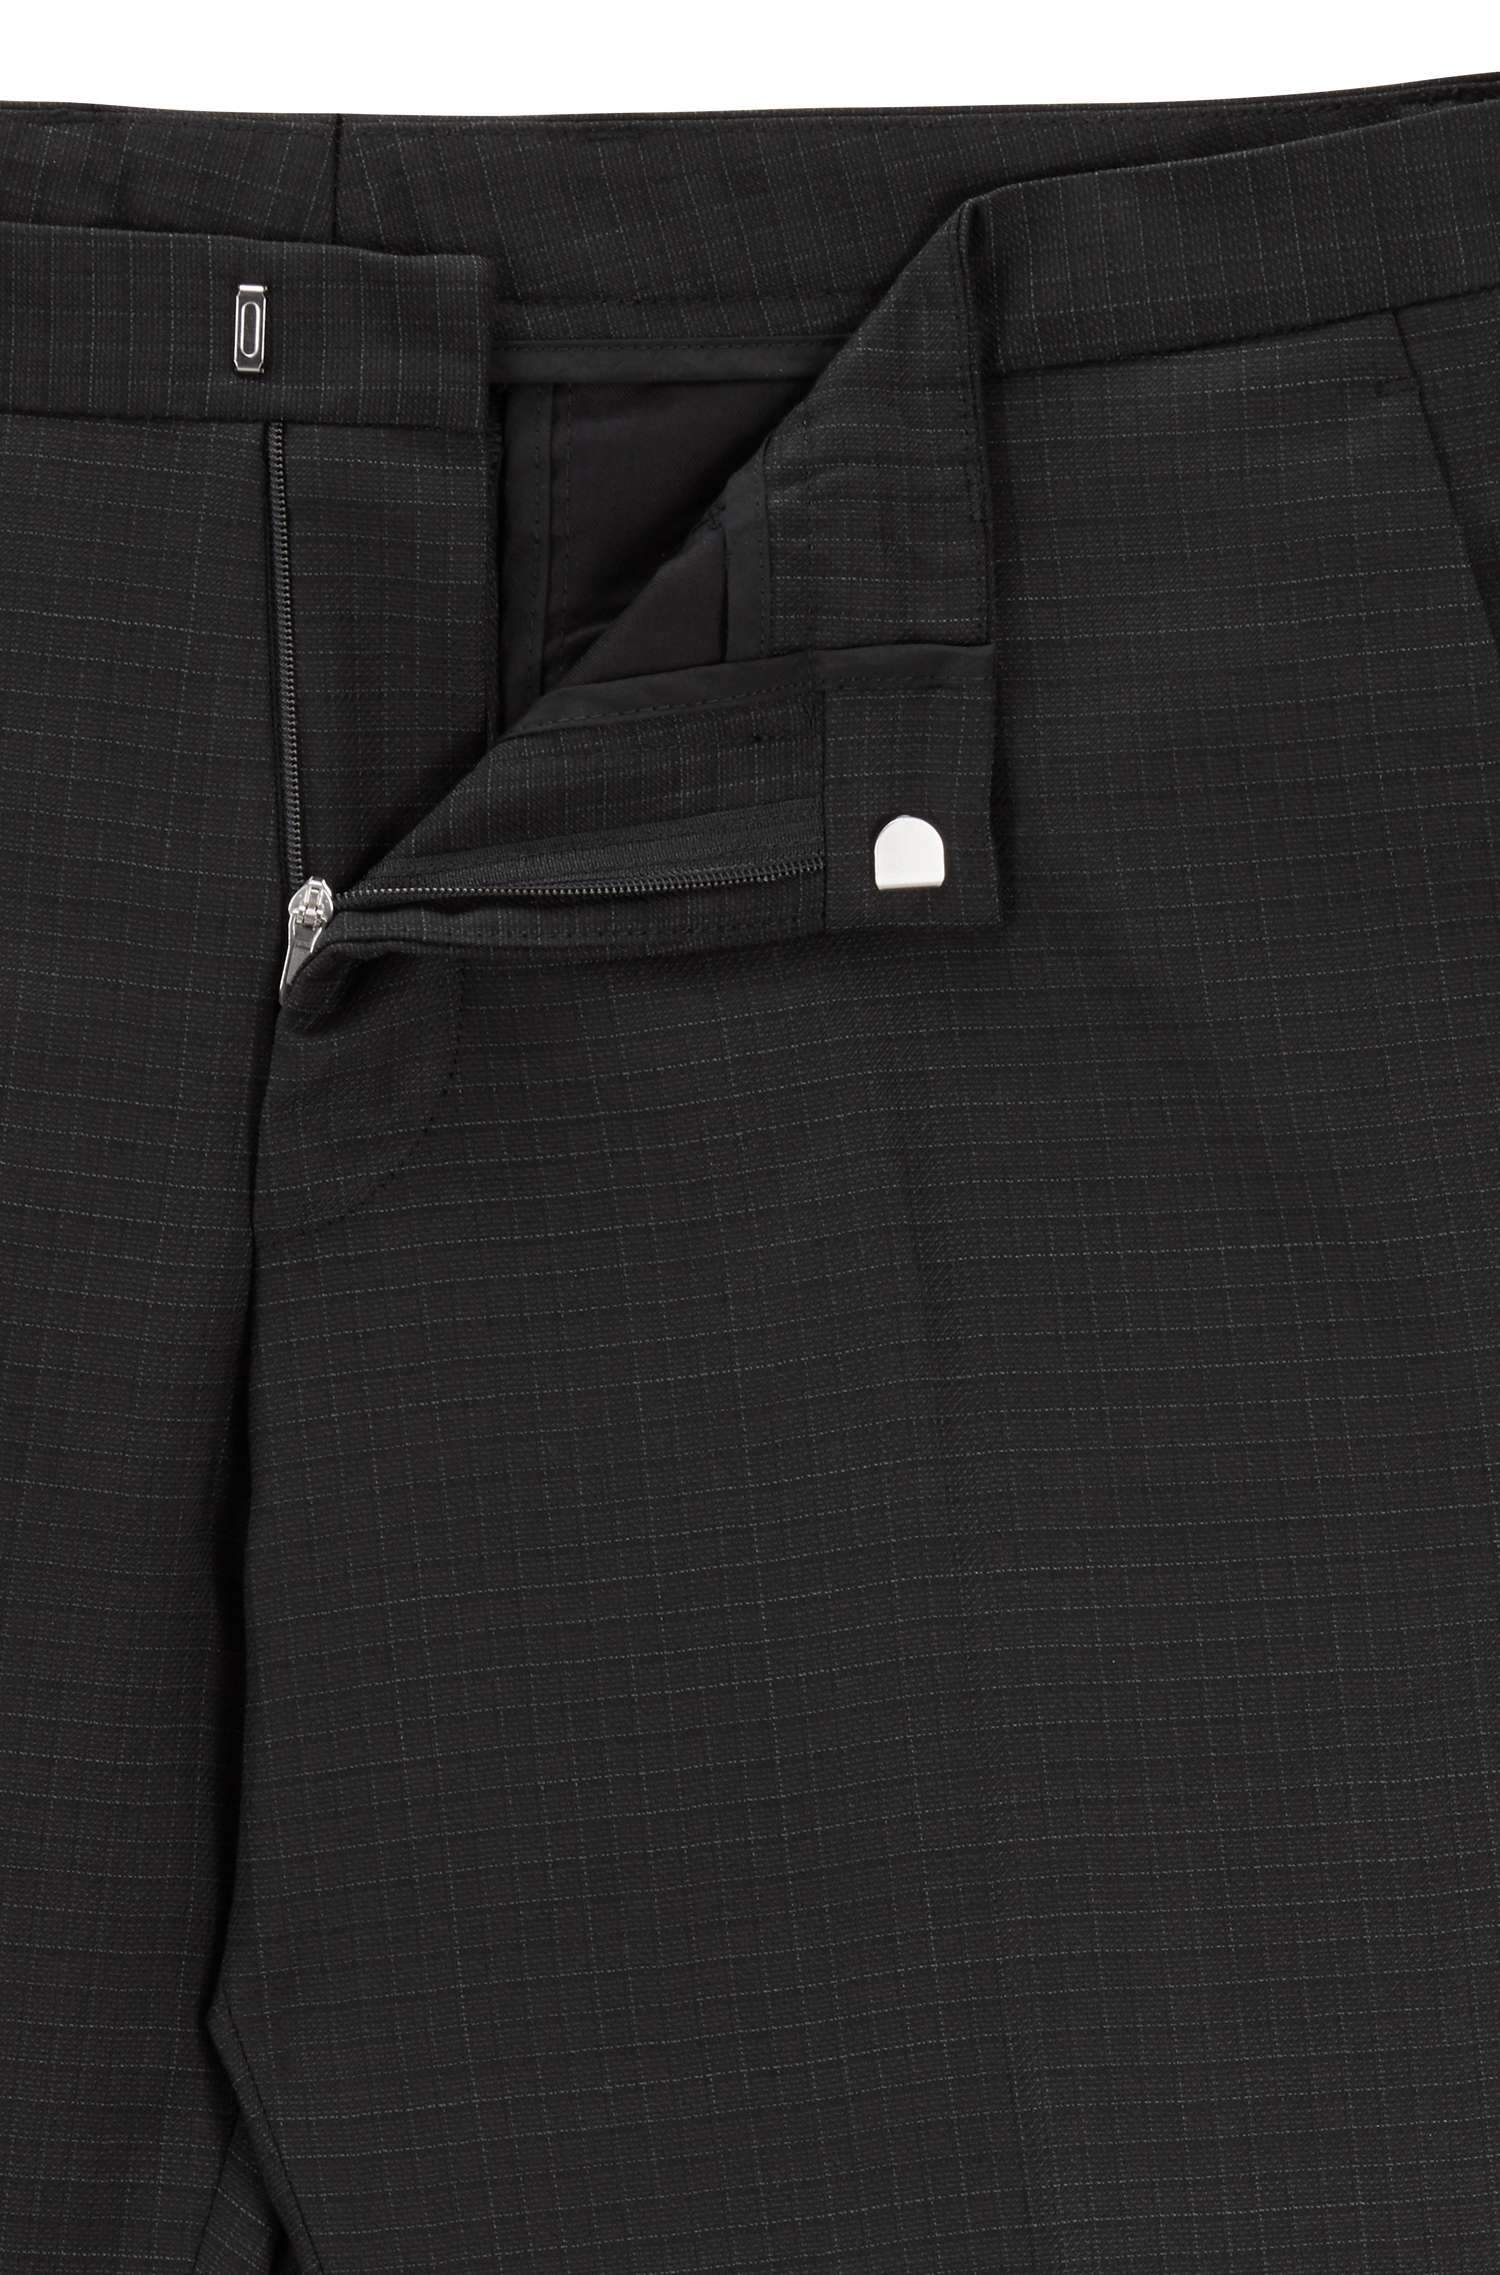 Pantalon habillé BOSS - 50426834 Noir